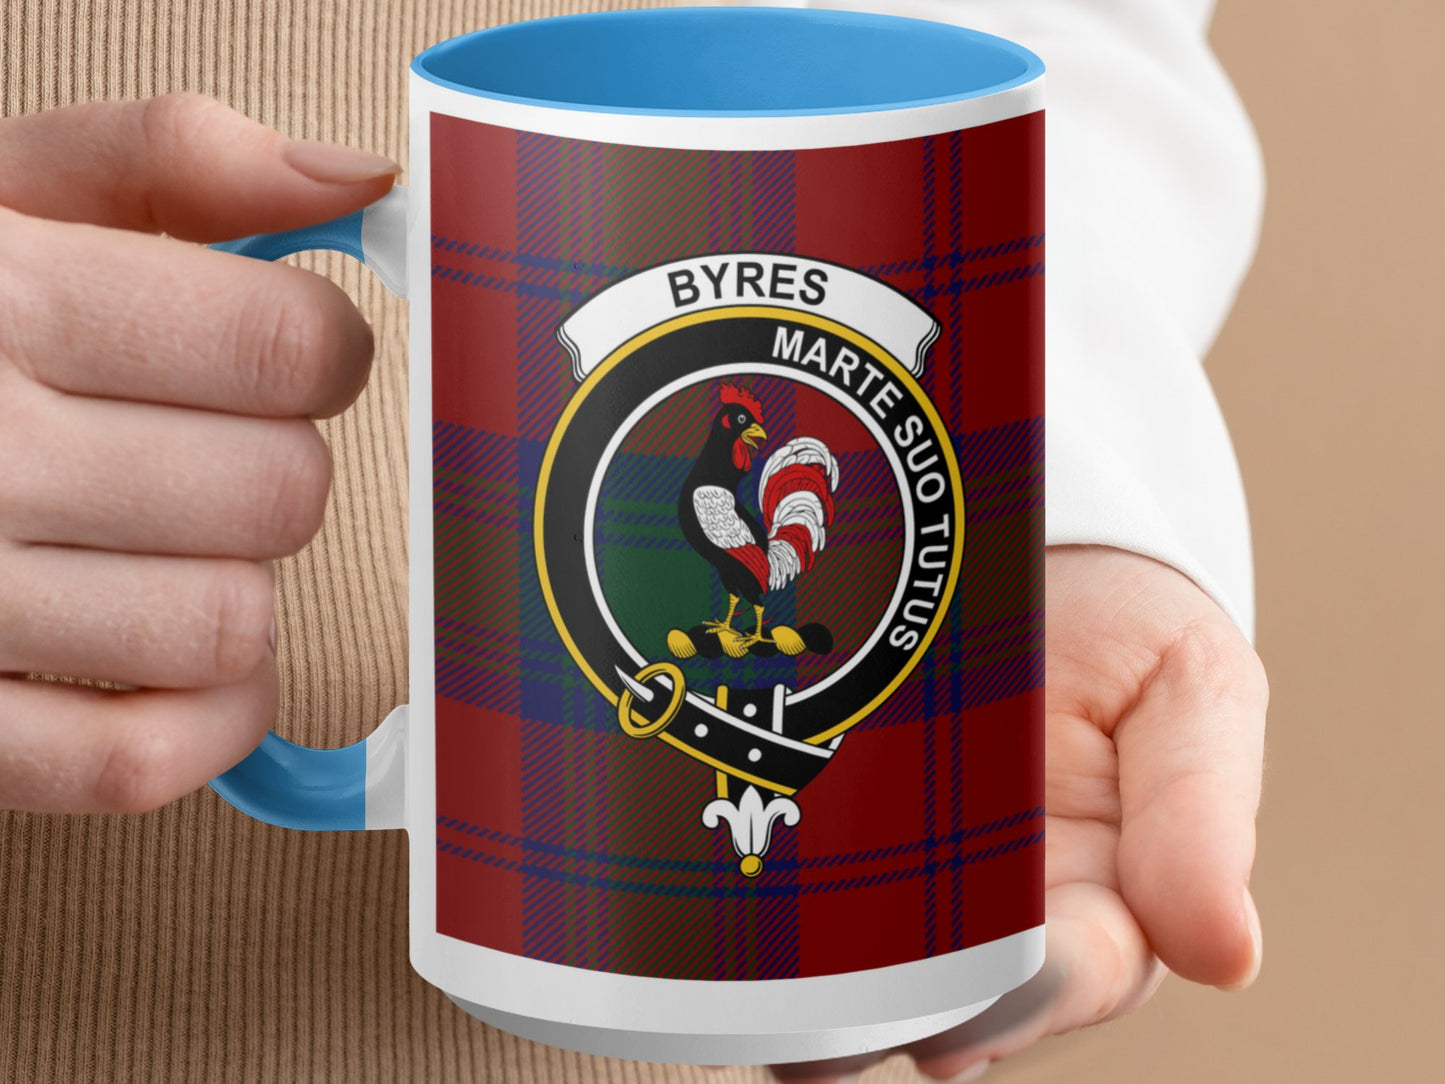 Bold Scottish Tartan Design With Rooster Crest Mug - Living Stone Gifts